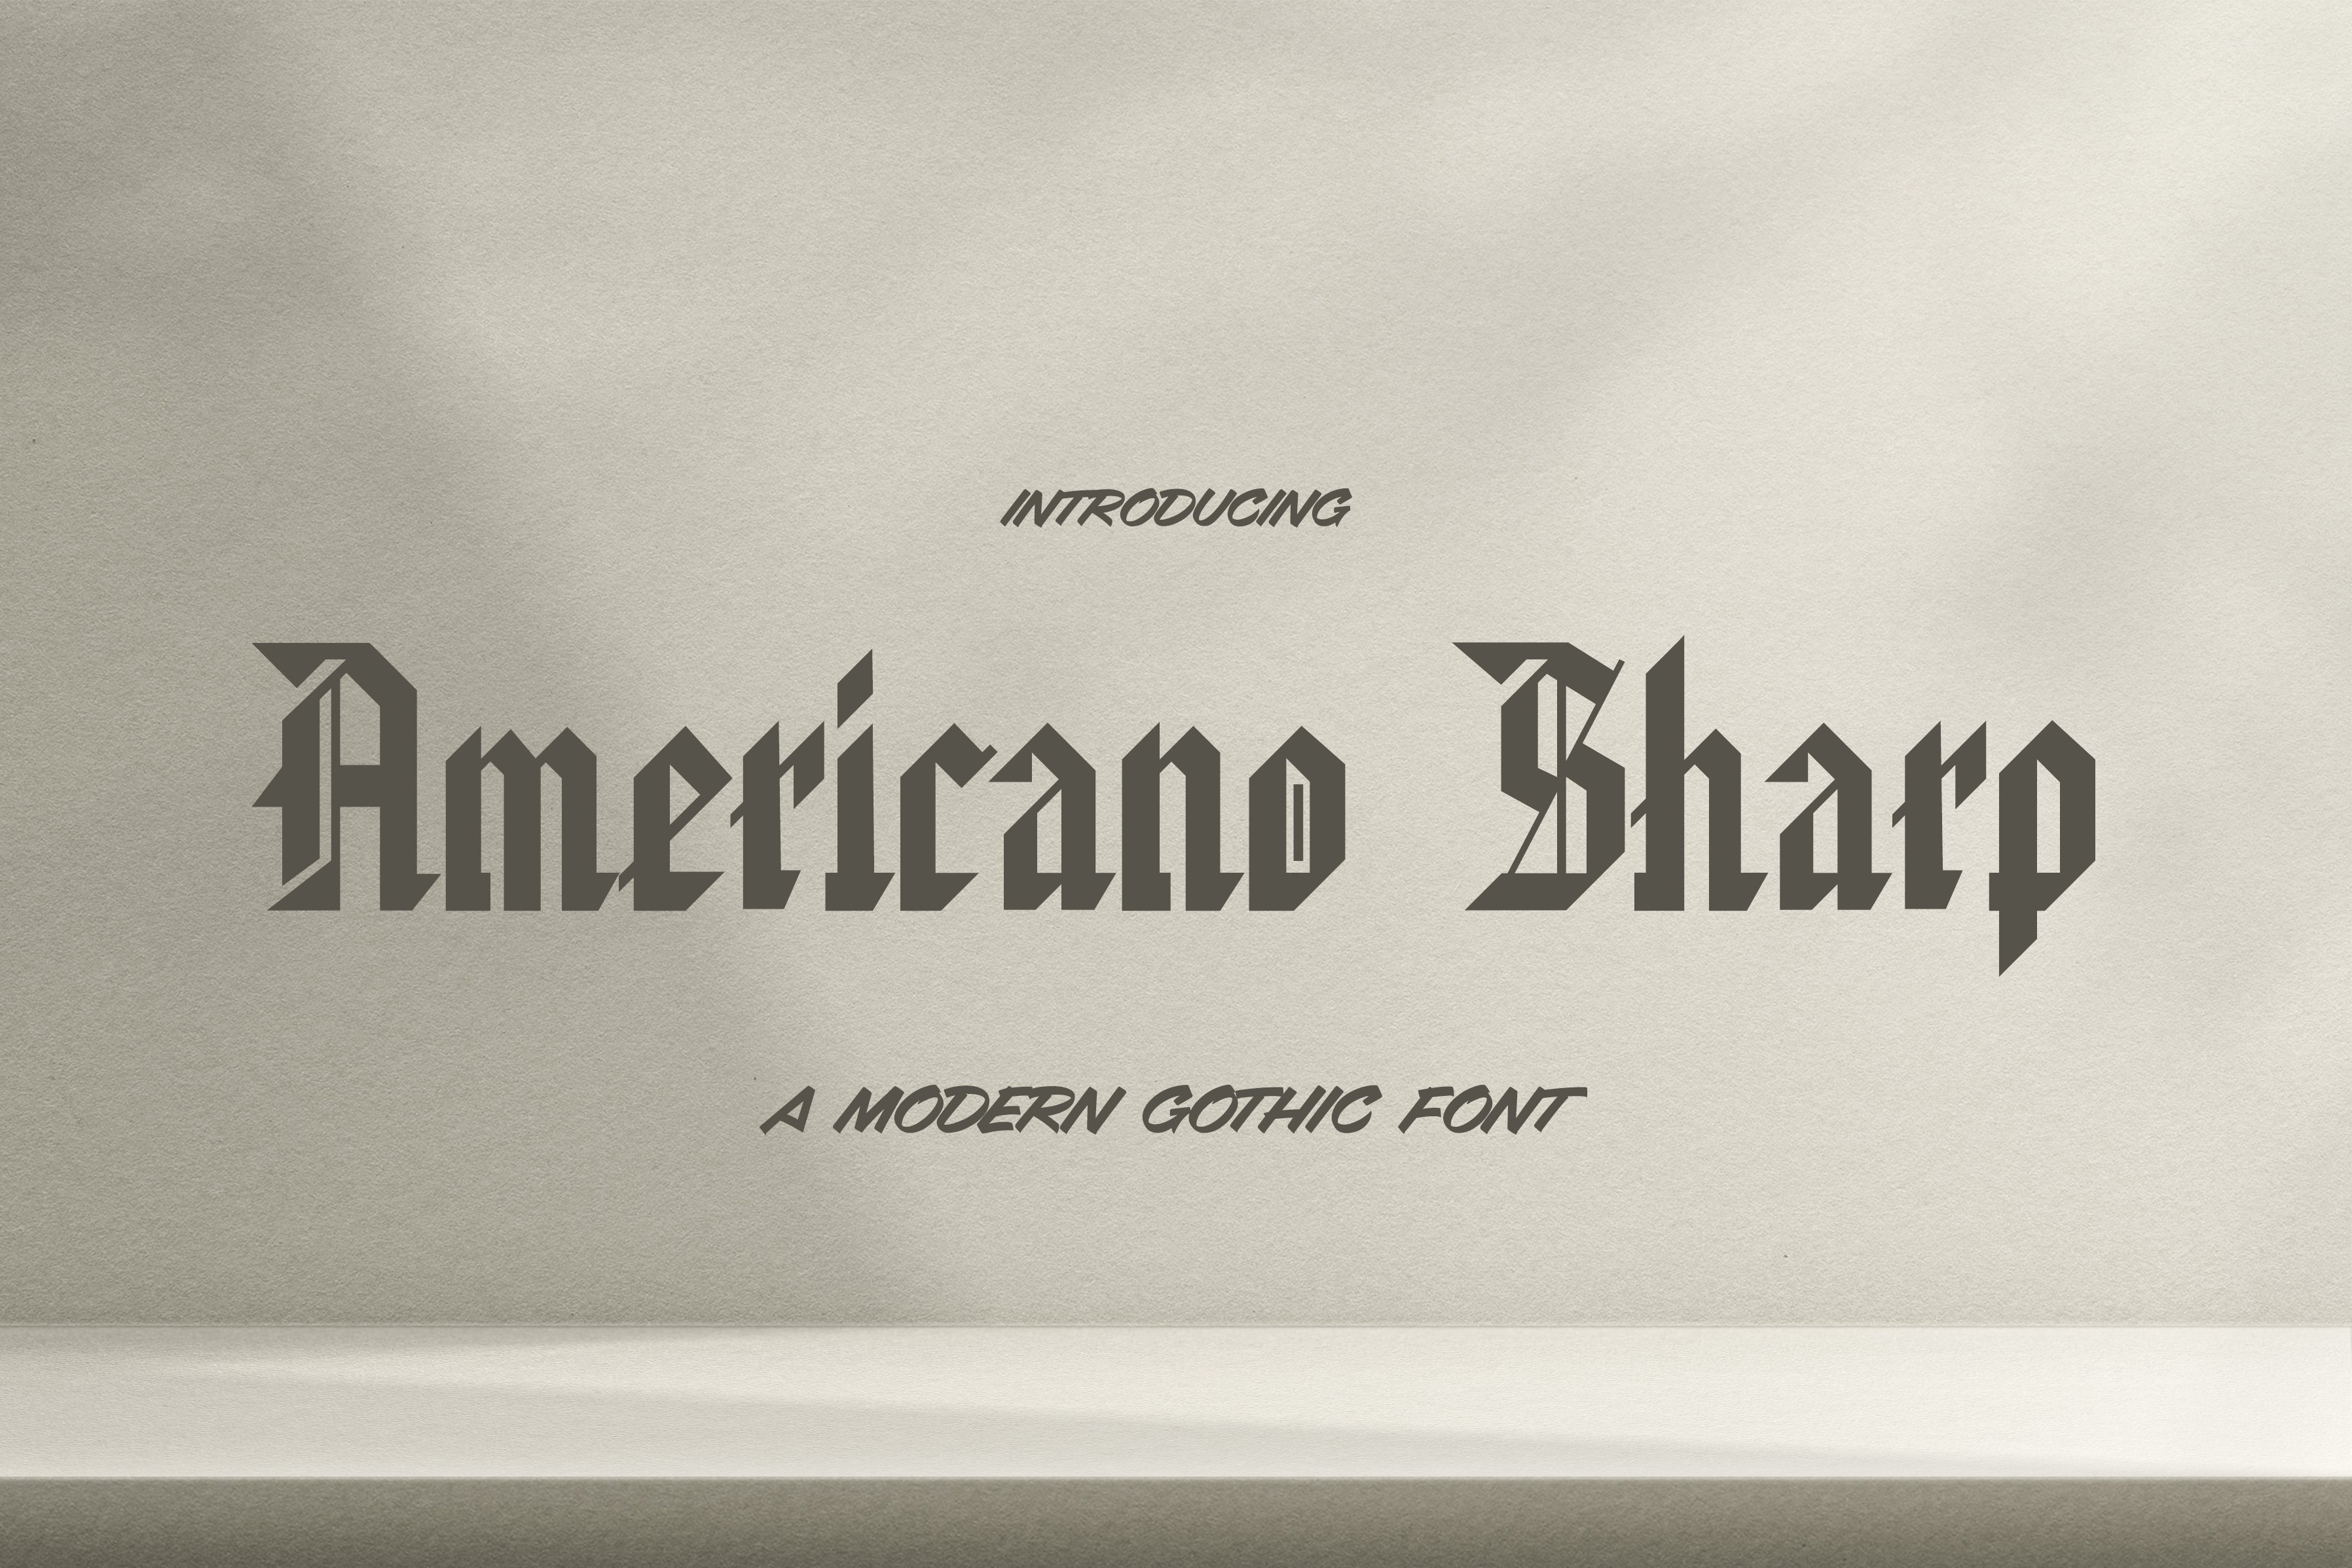 Americano Sharp Font cover image.